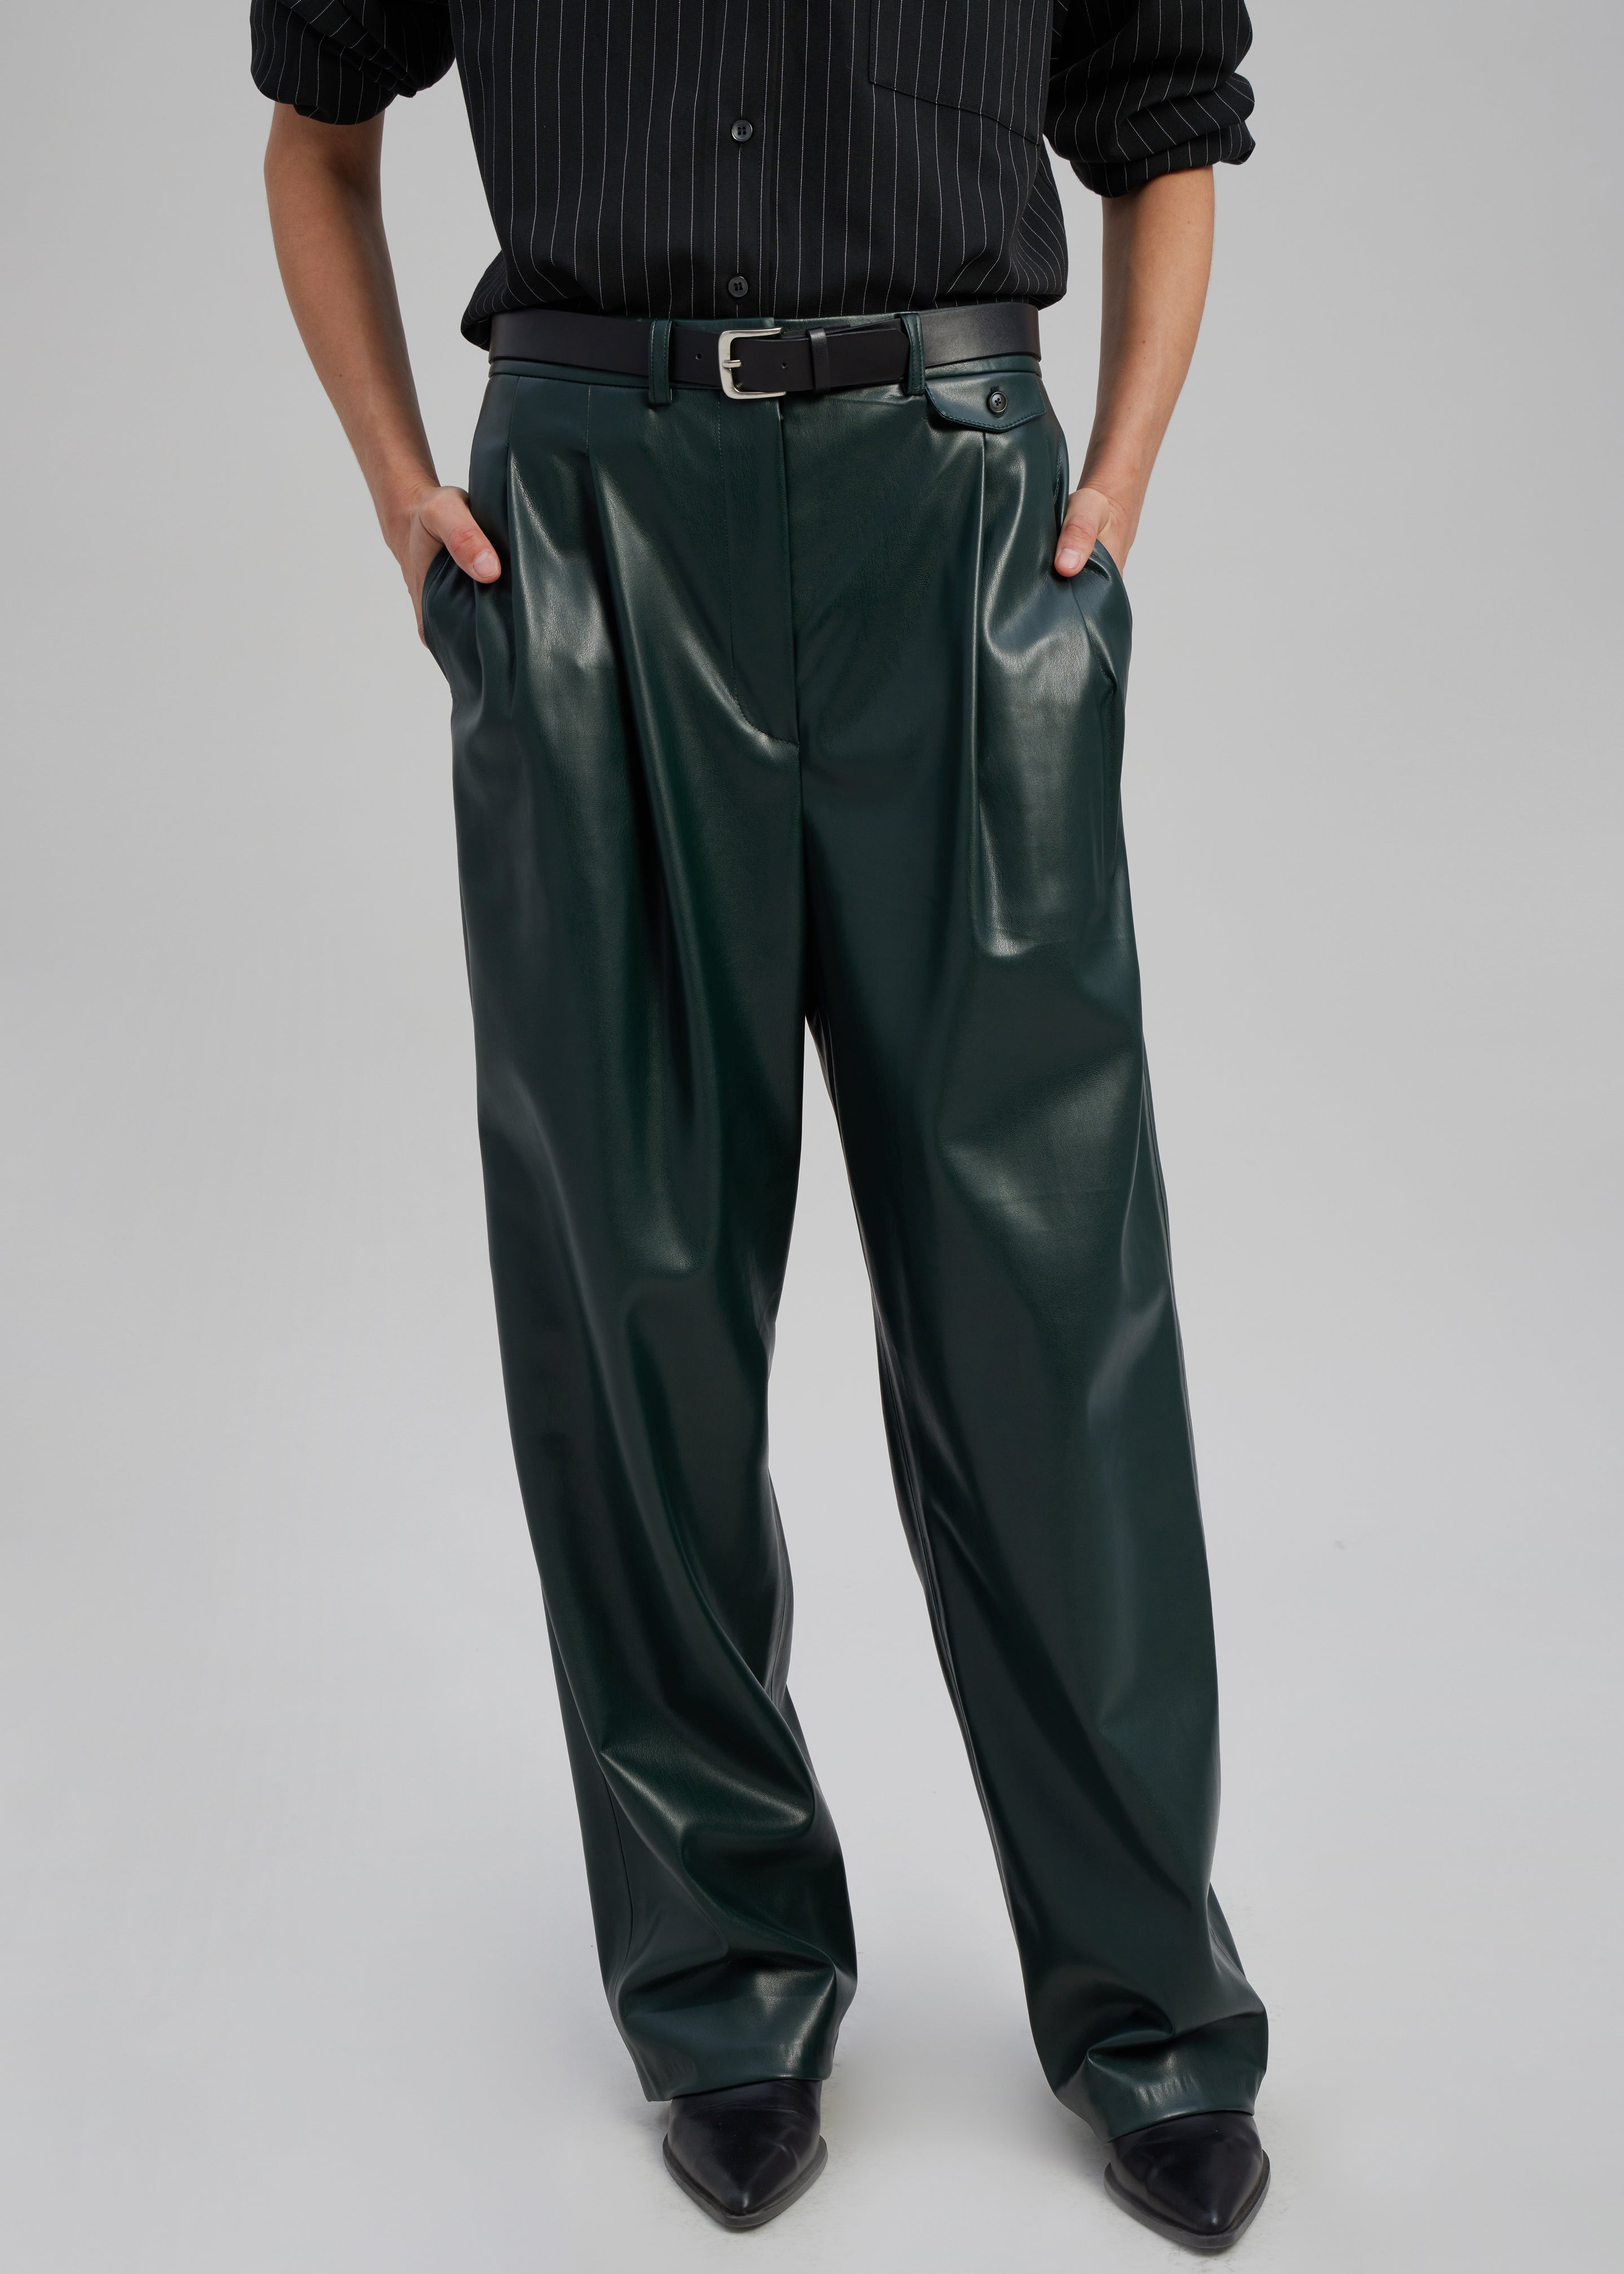 Pernille Faux Leather Pants - Bottle Green - 2